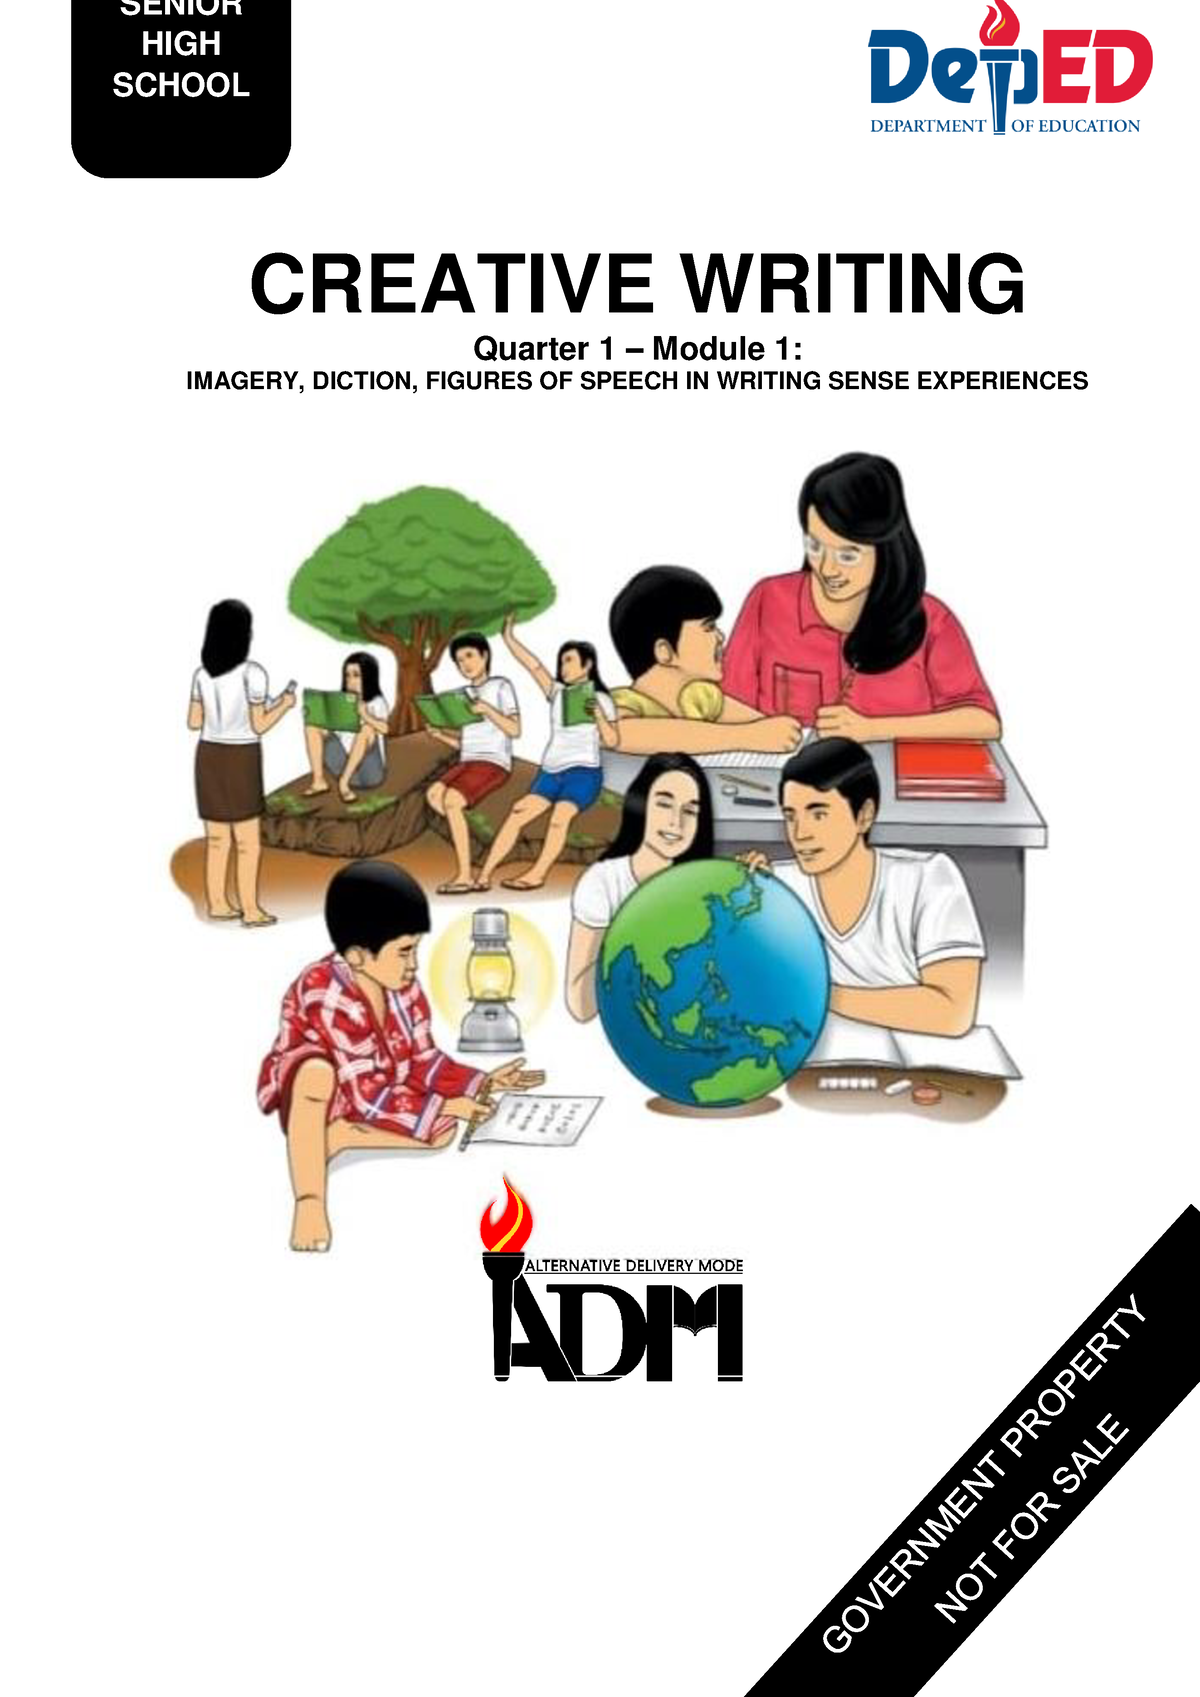 creative writing module 2 quarter 3